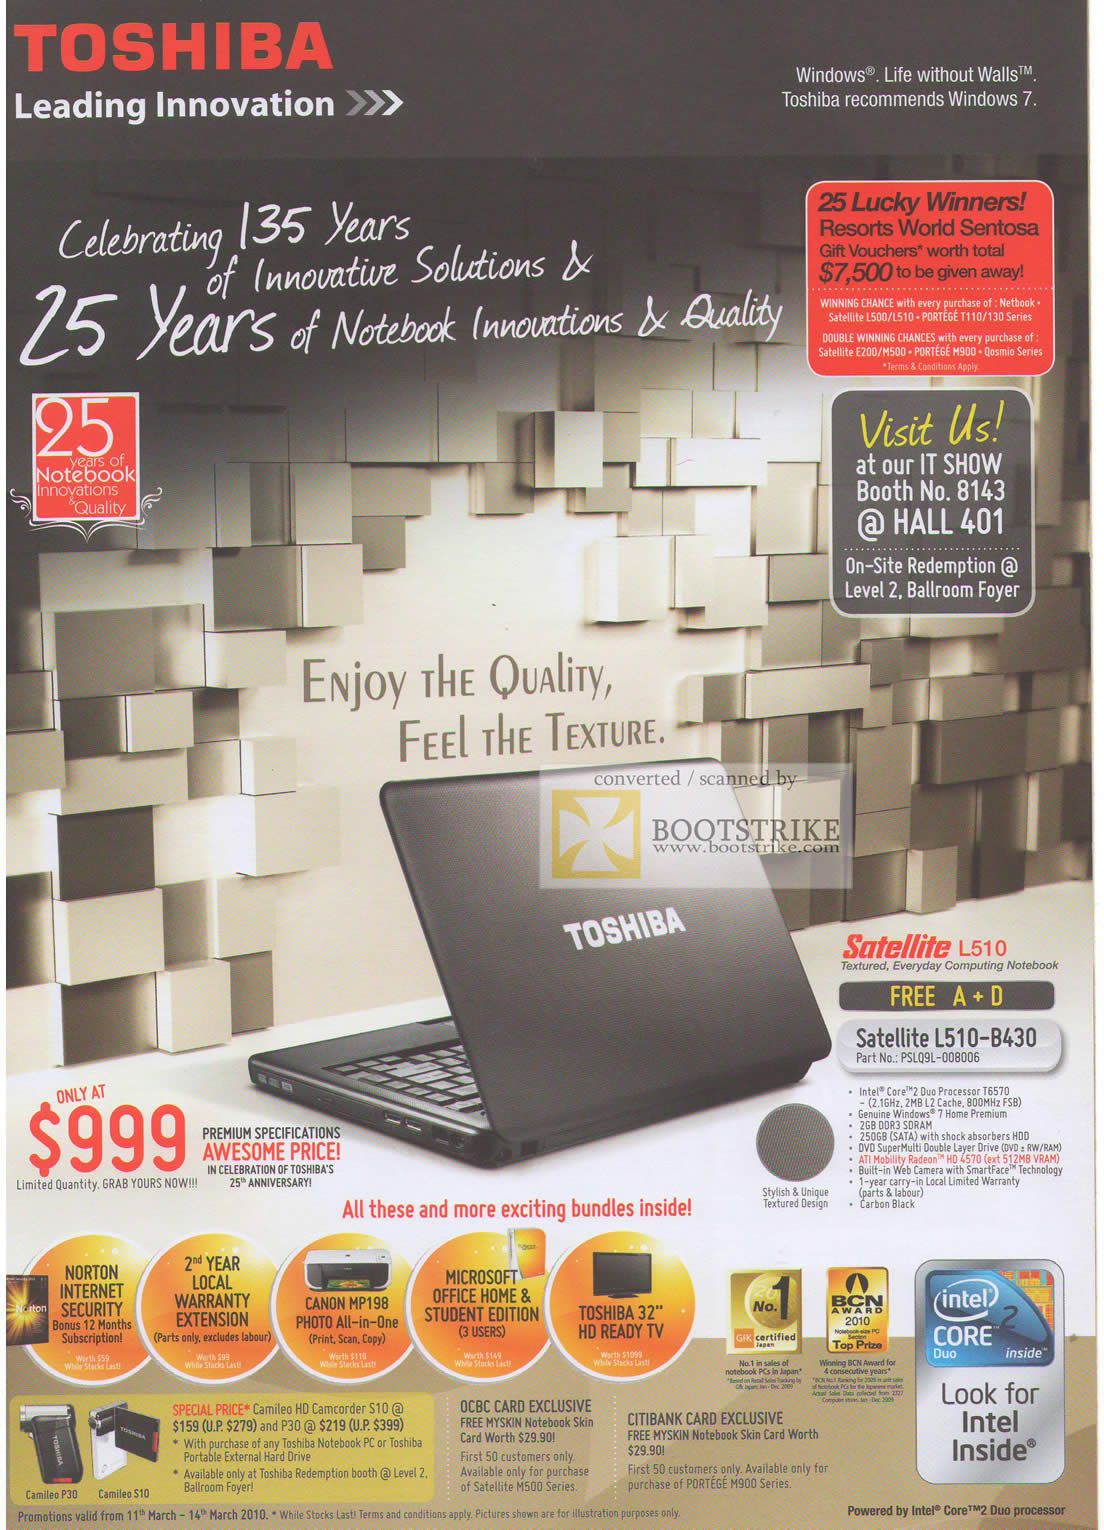 IT Show 2010 price list image brochure of Toshiba Notebook Satellite L510 B430